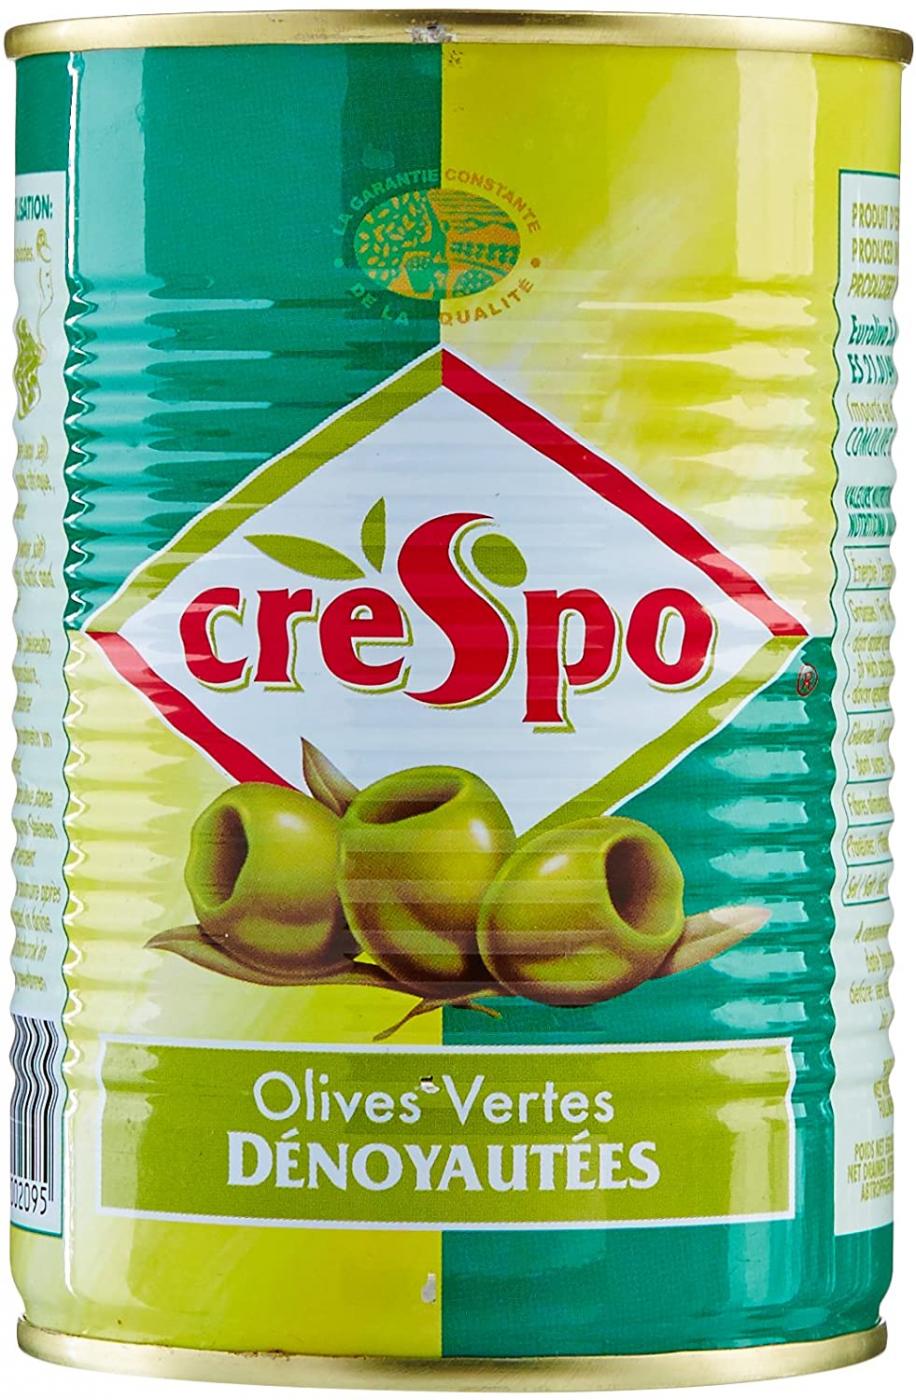 Crespo Olives Vertes Dénoyautées Boite 170 g 